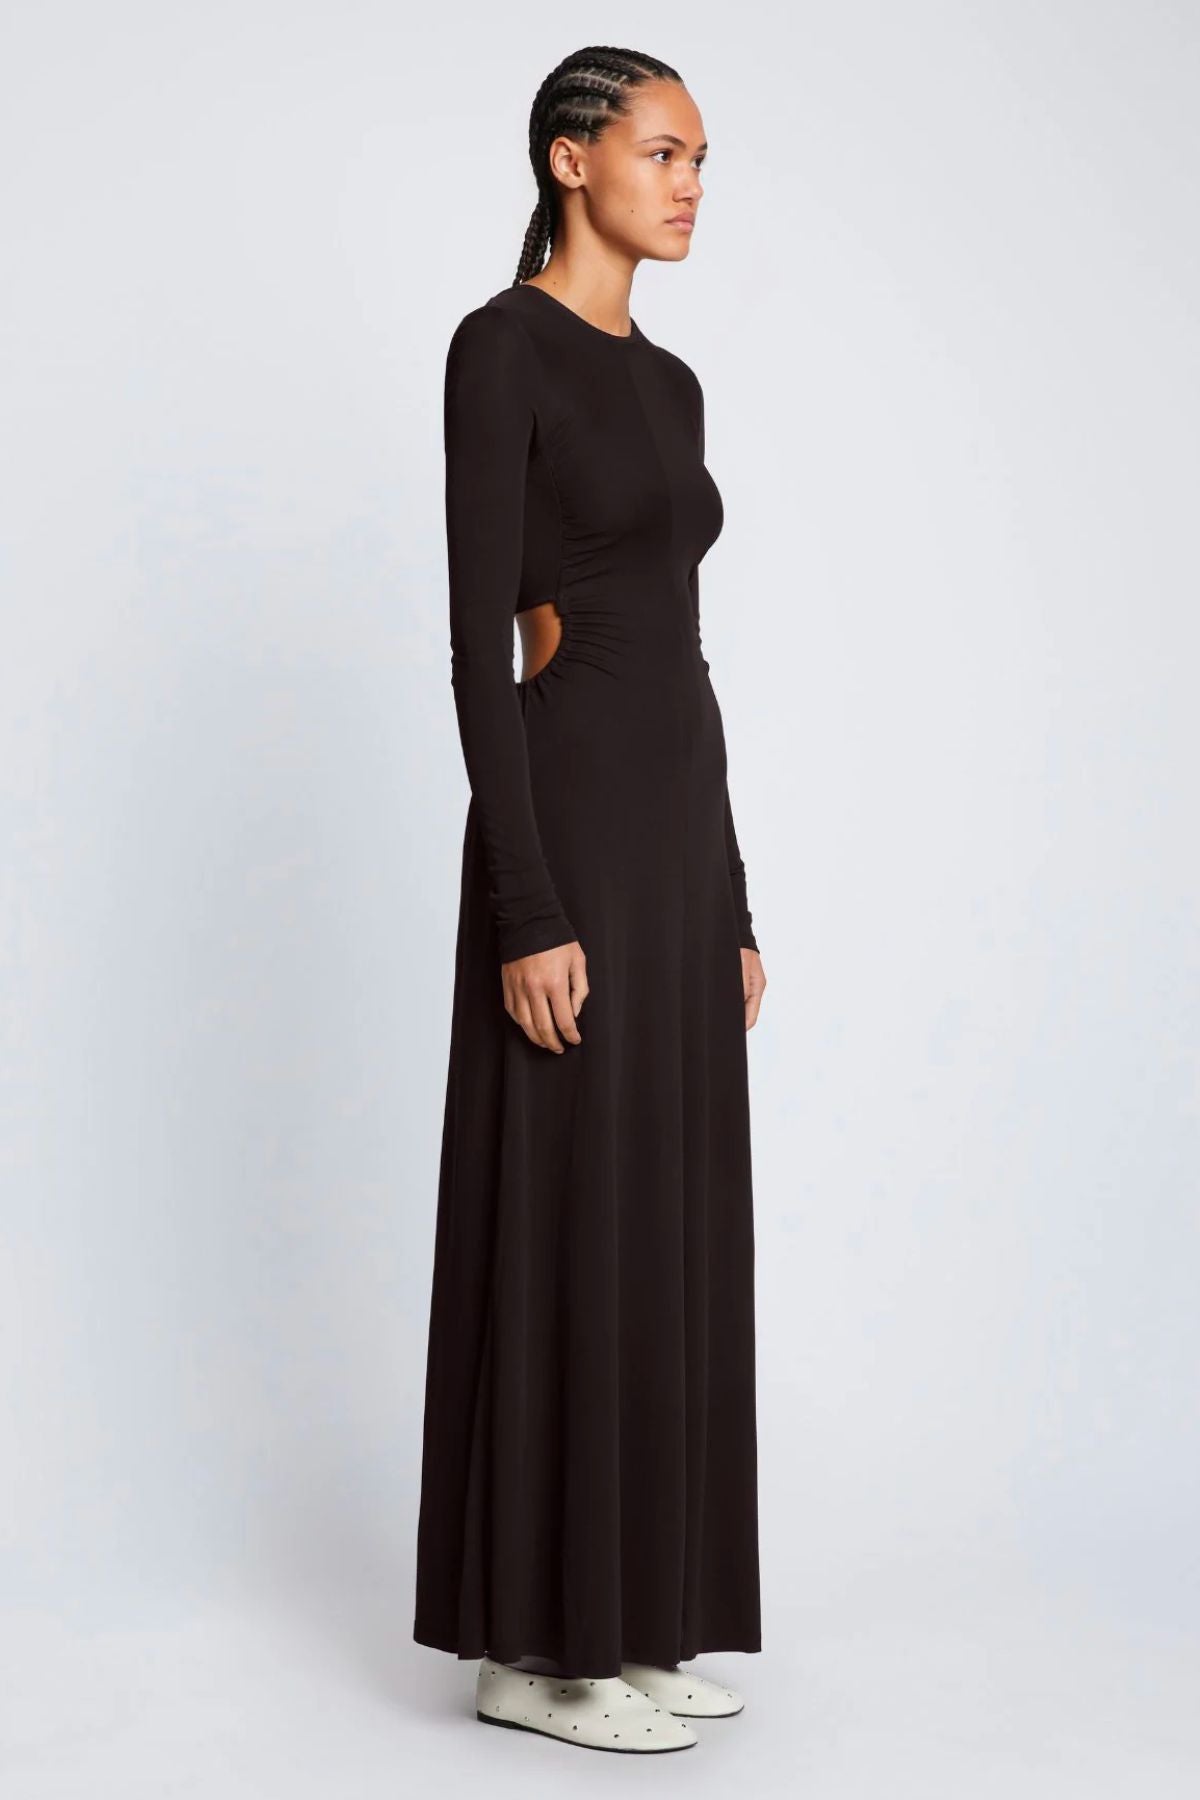 Proenza Schouler White Label LS Jersey Open Back Dress - Black